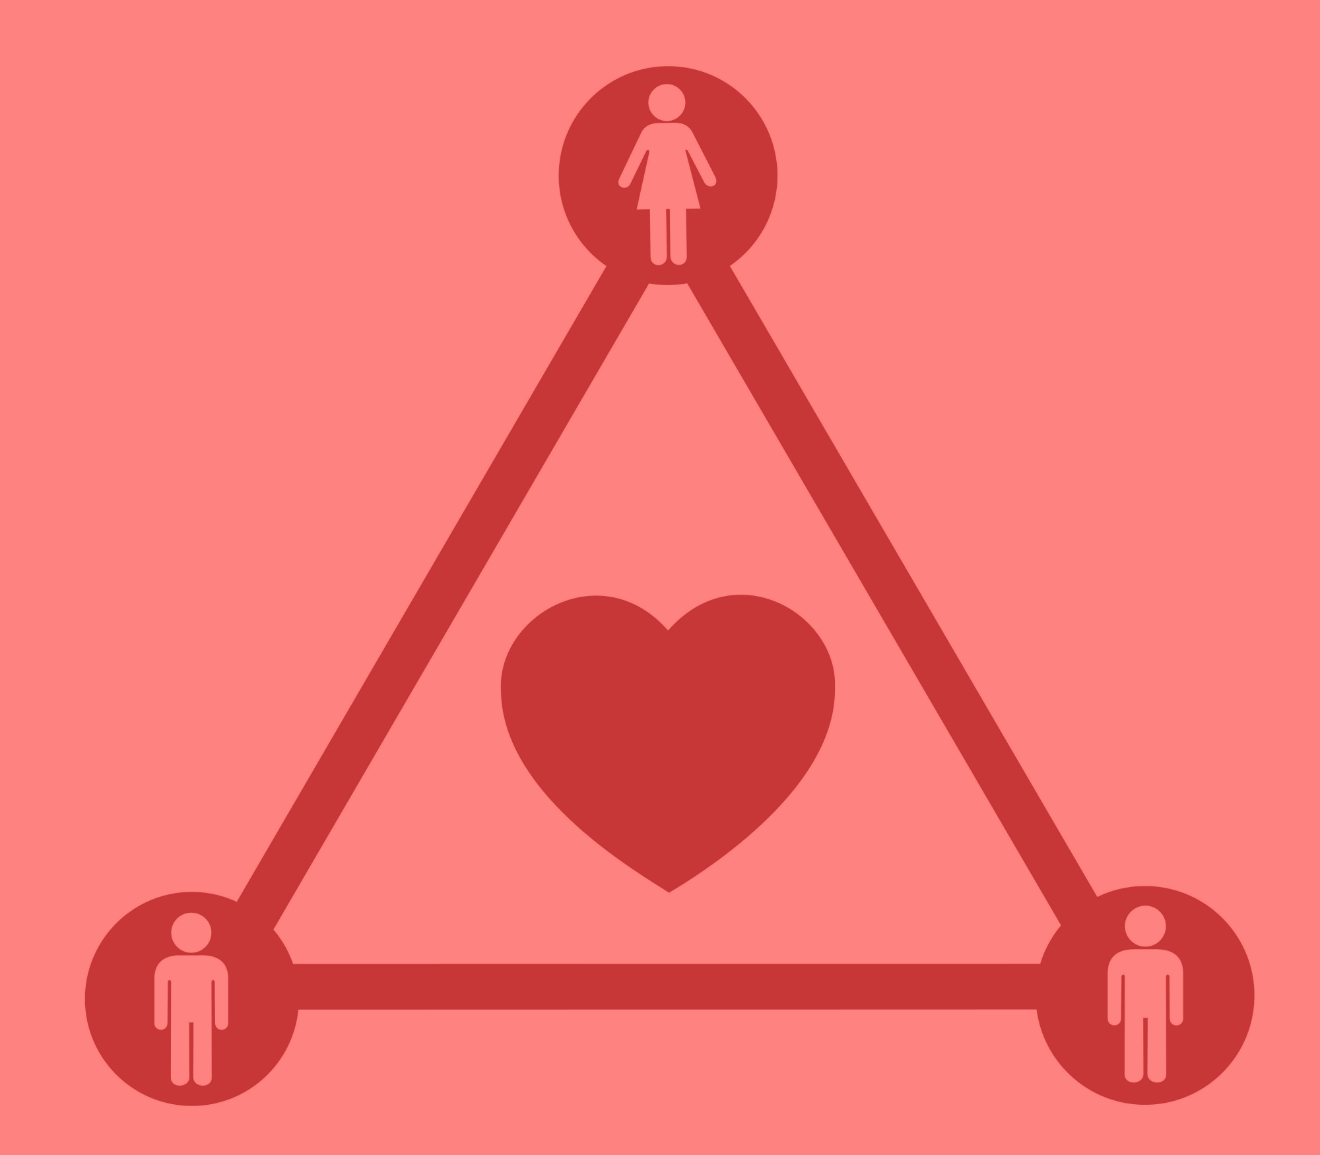 Benefits of Ethical Non-Monogamy